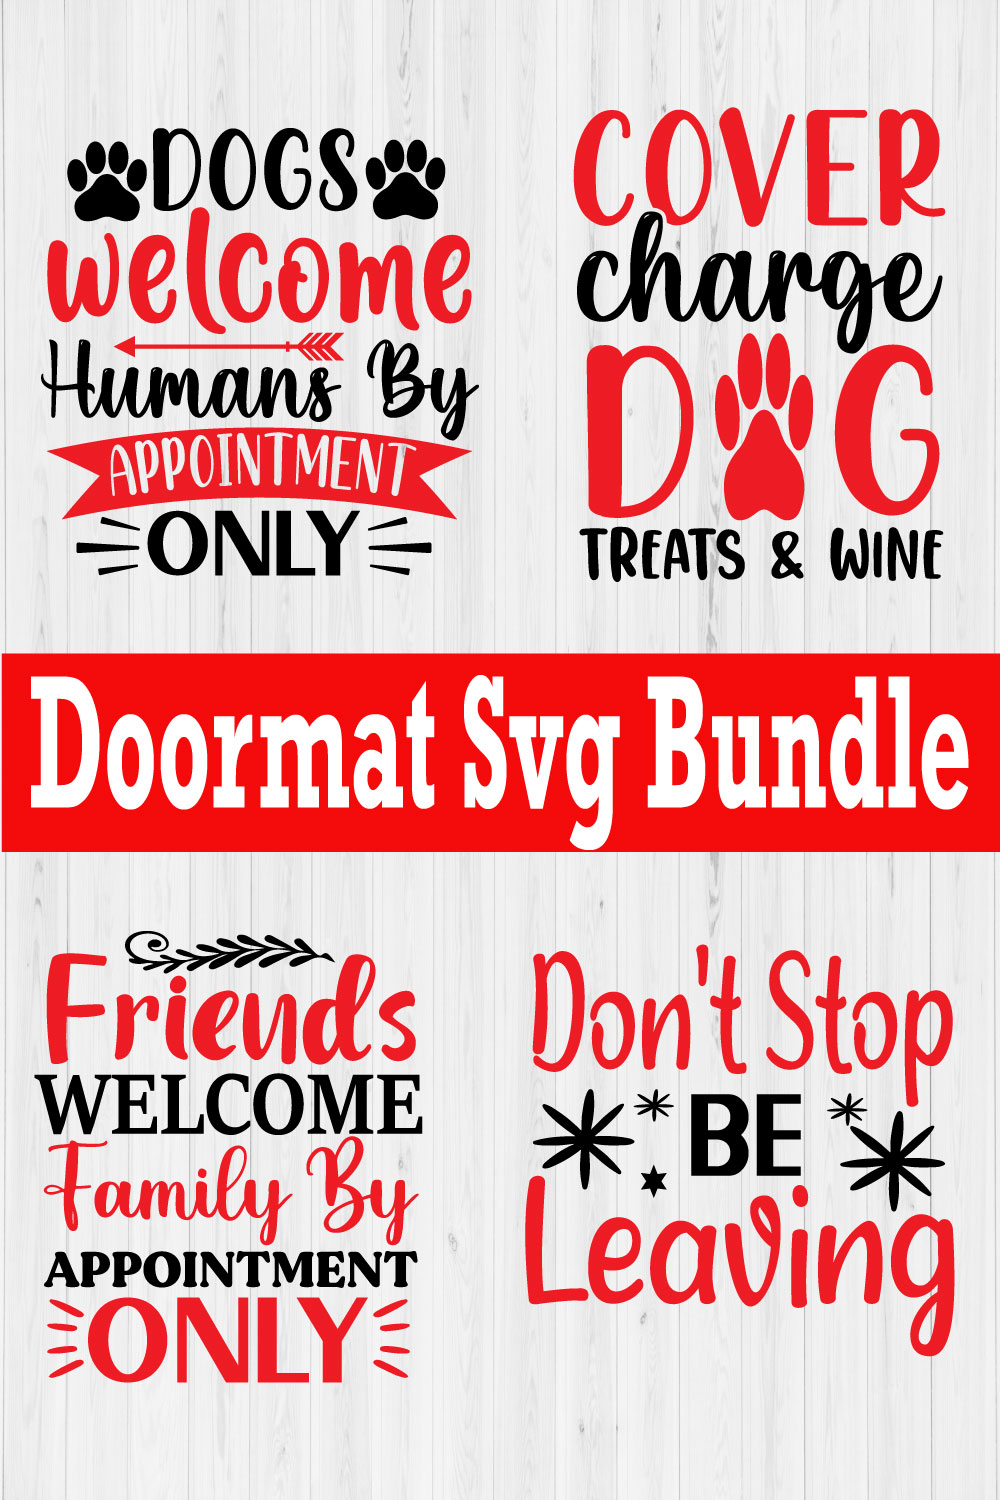 Doormat Svg Design Bundle Vol2 pinterest preview image.